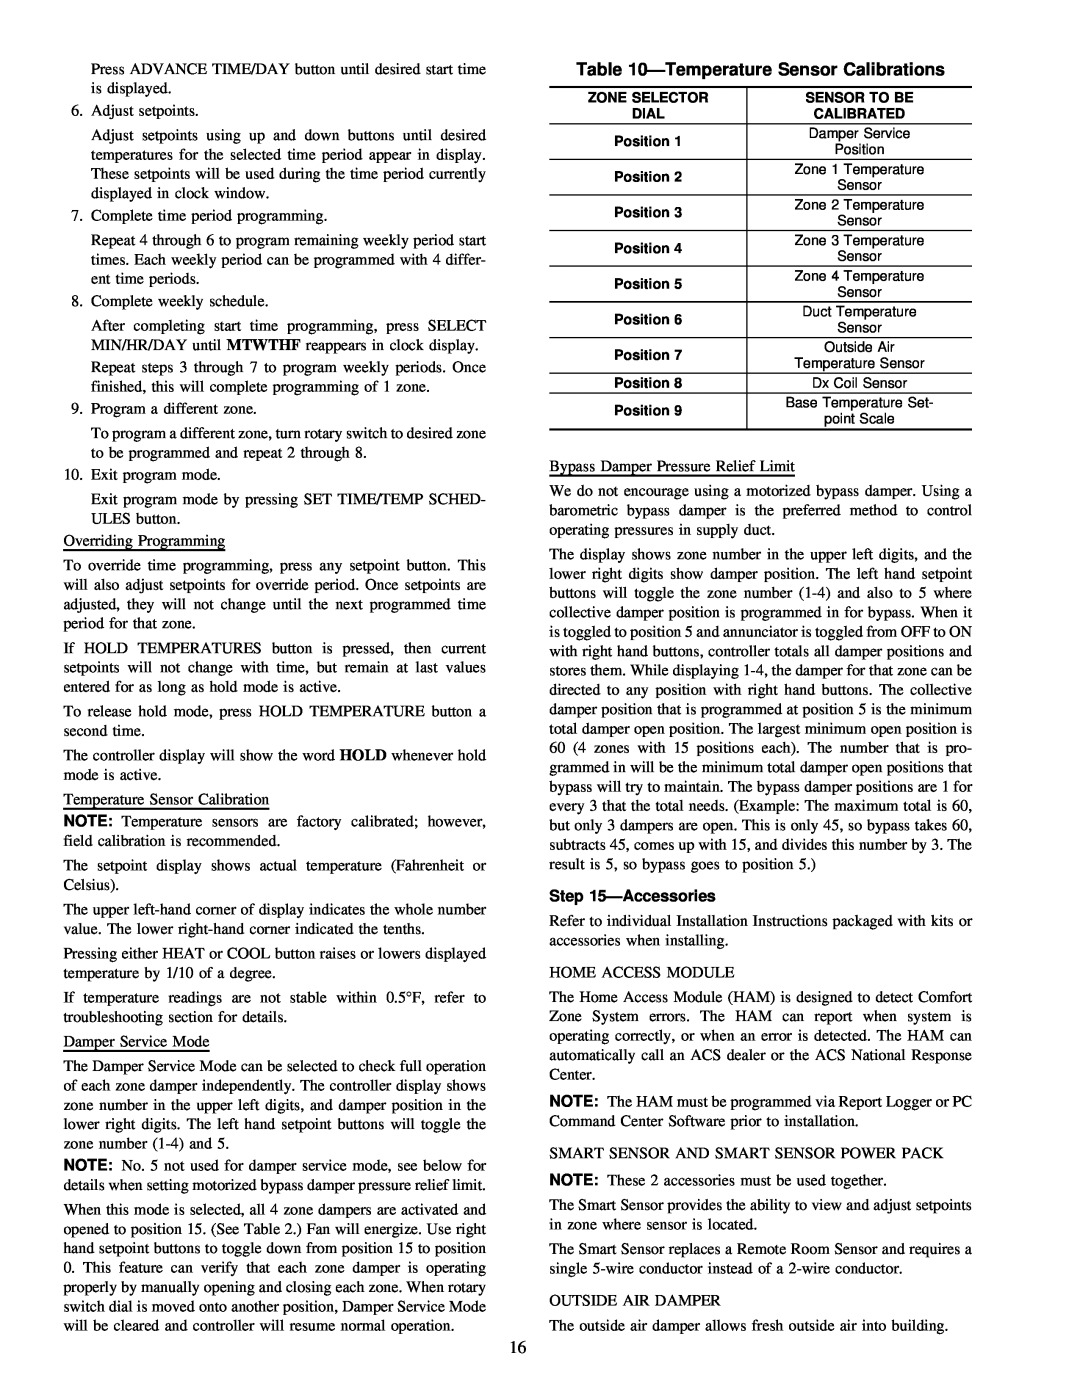 Carrier ZONEKIT4ZCAR instruction manual ÐTemperature Sensor Calibrations, ÐAccessories 